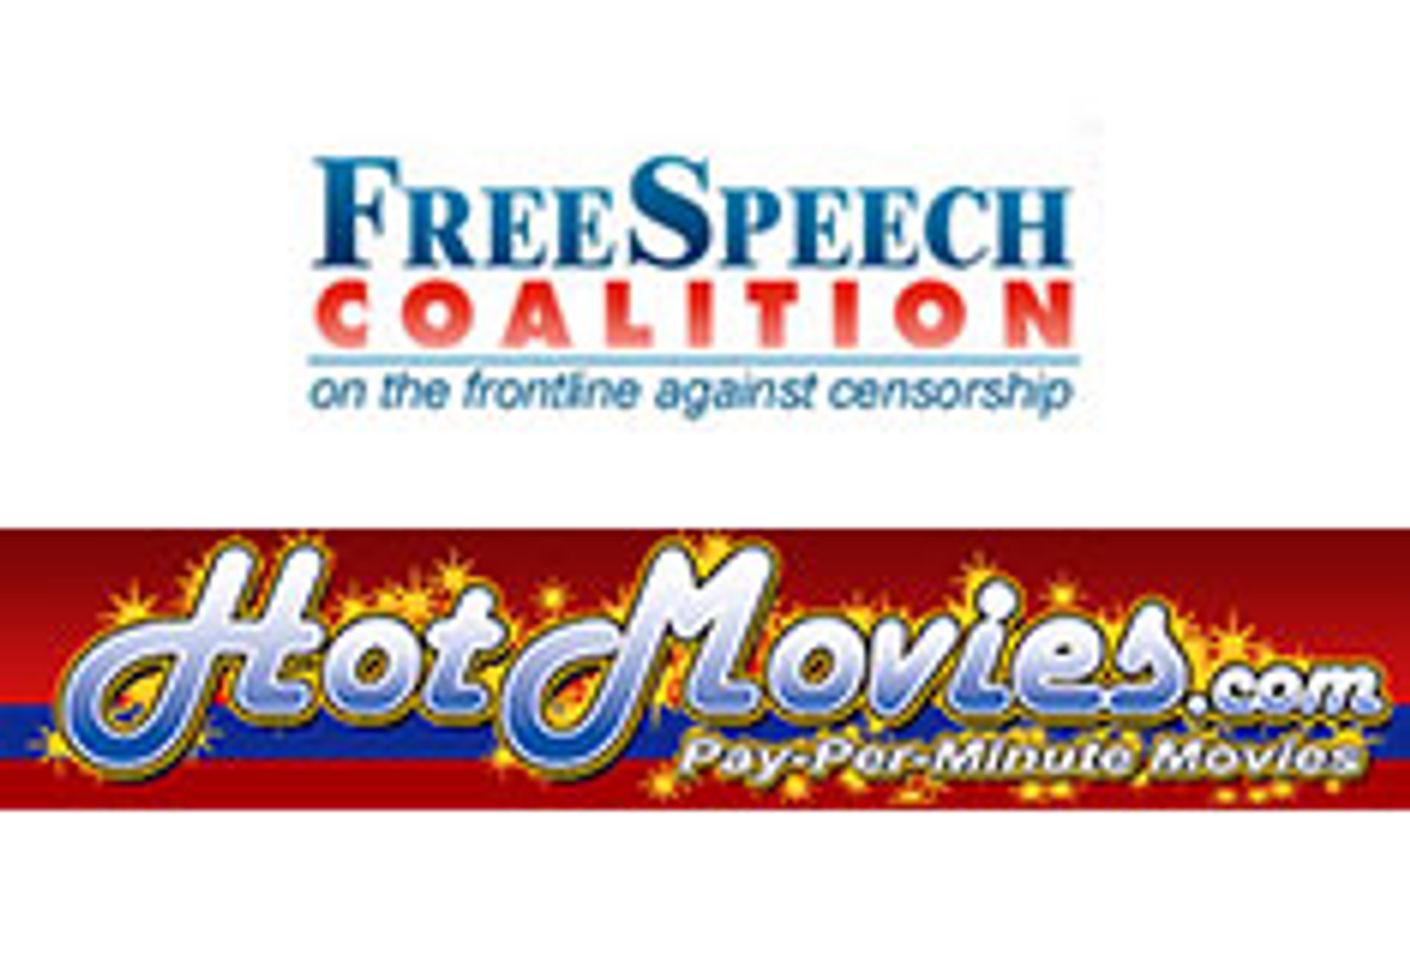 FSC, HotMovies.com Prepare for FreedomStreams Event